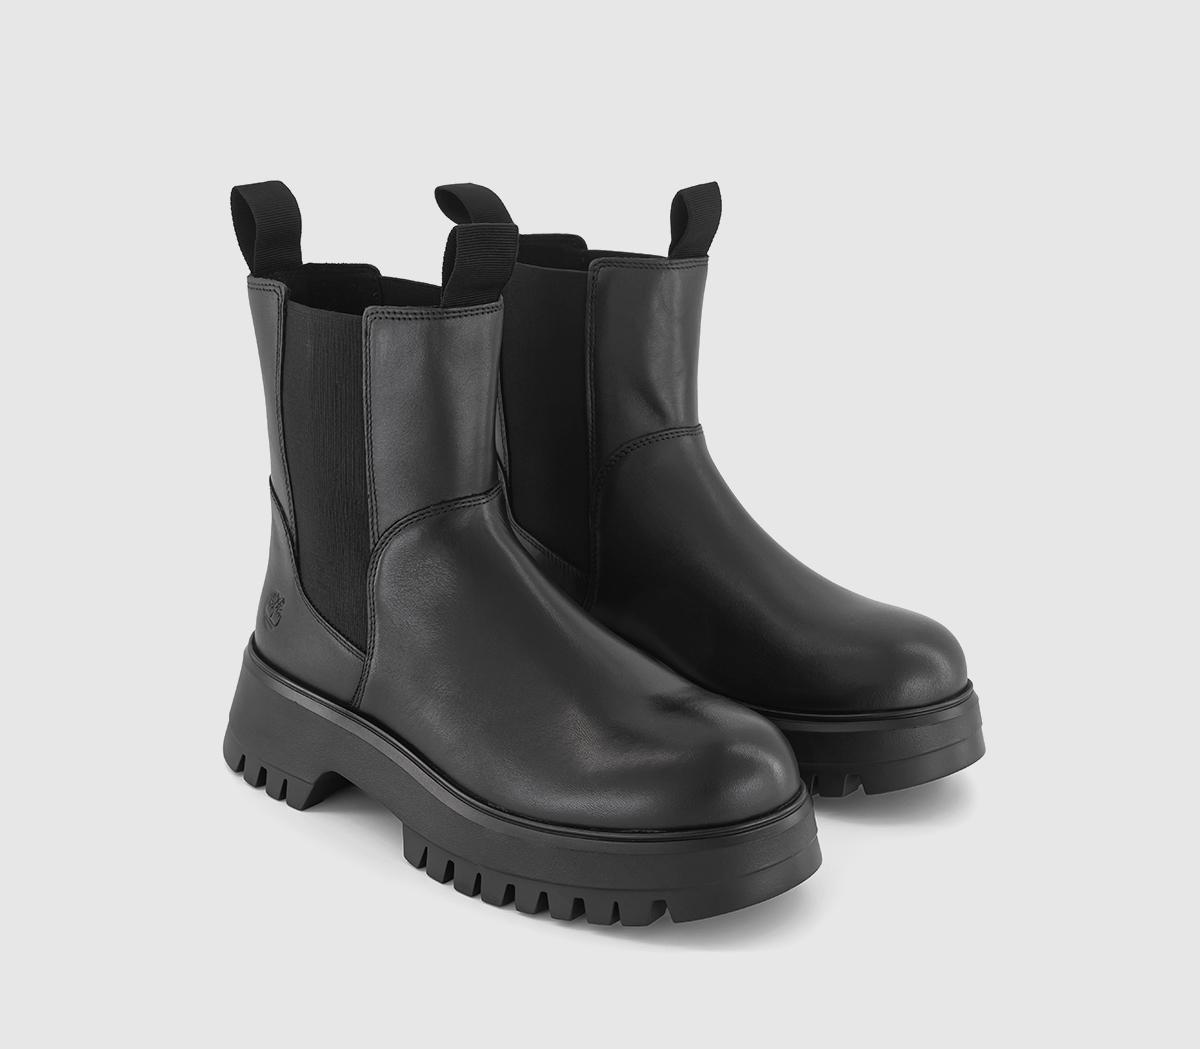 Timberland Tn Chelsea Boots Black, 6